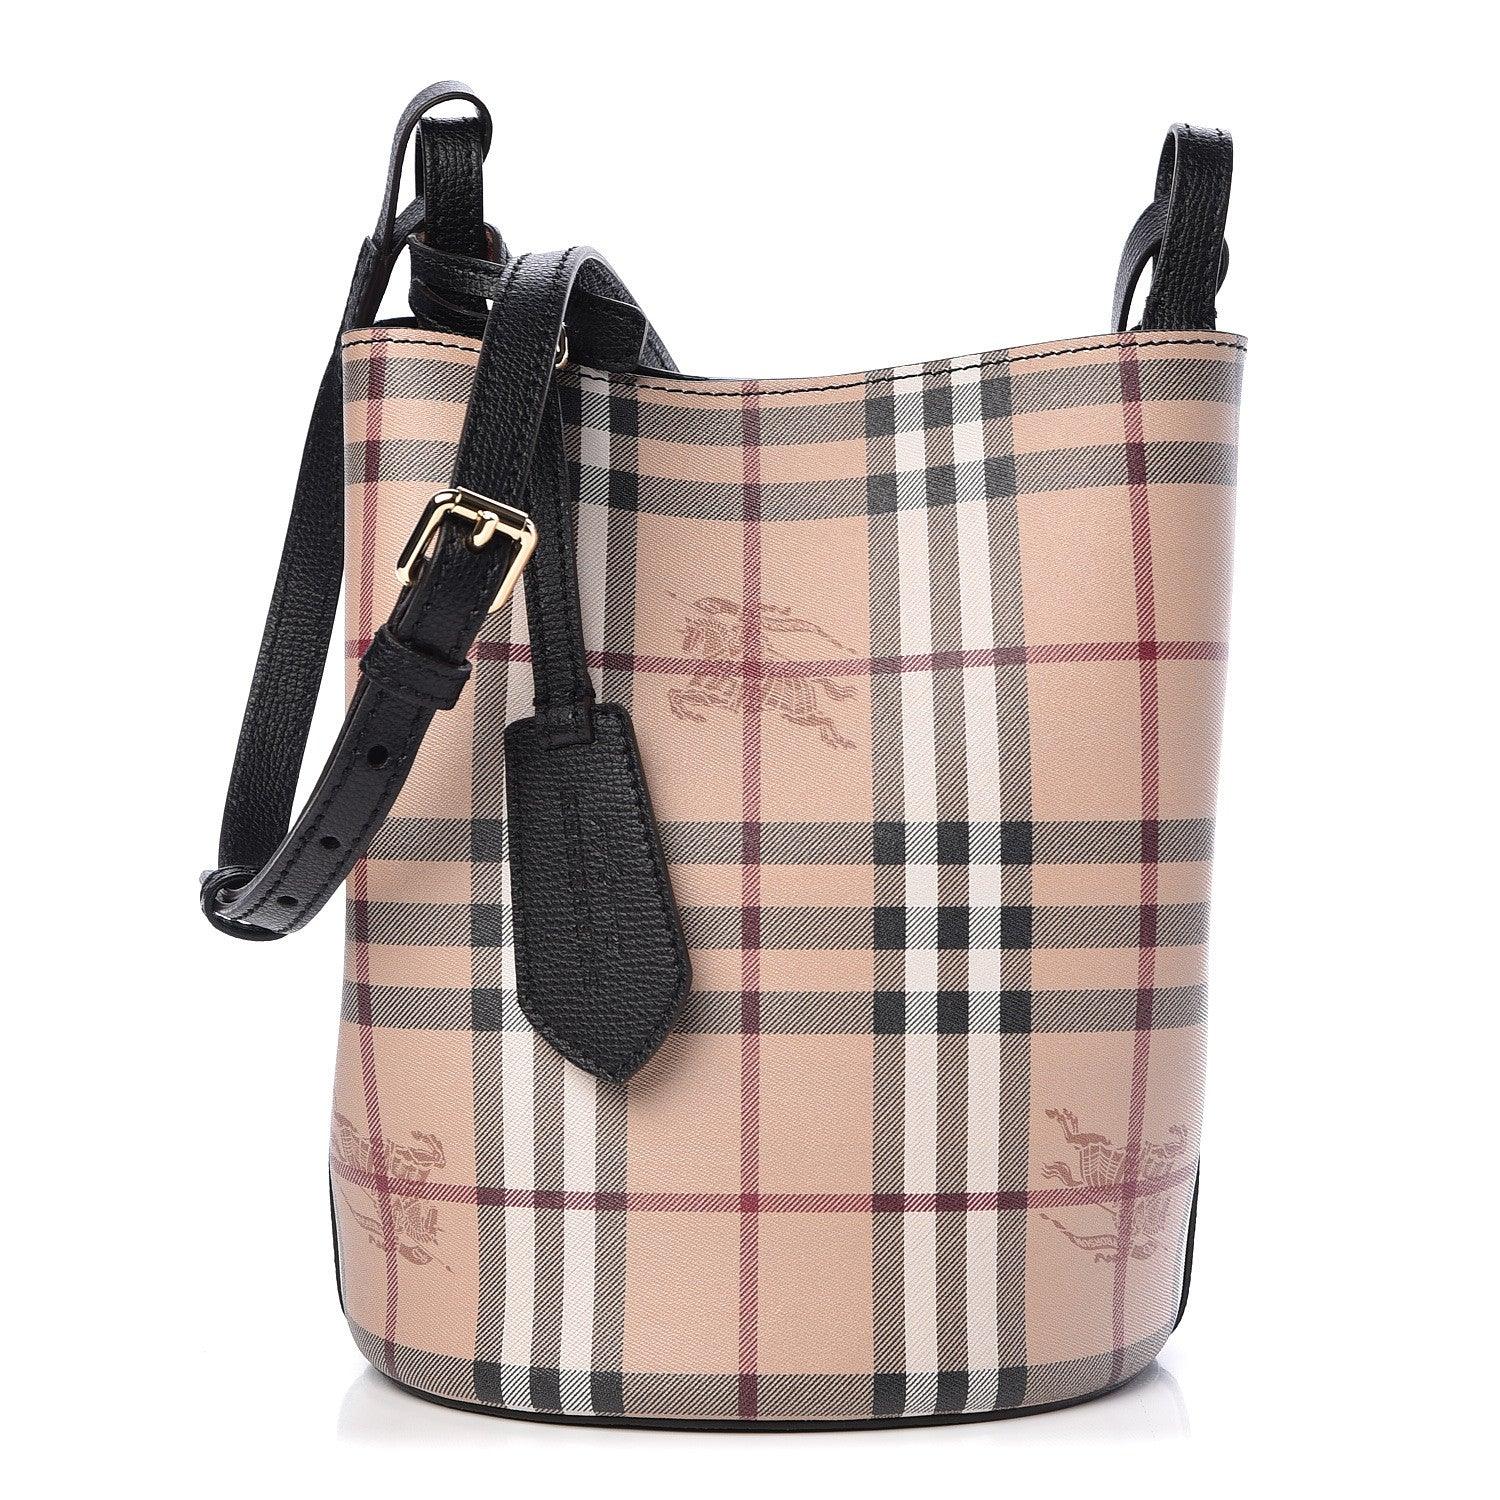 Women's Burberry Handbags & Purses | Neiman Marcus